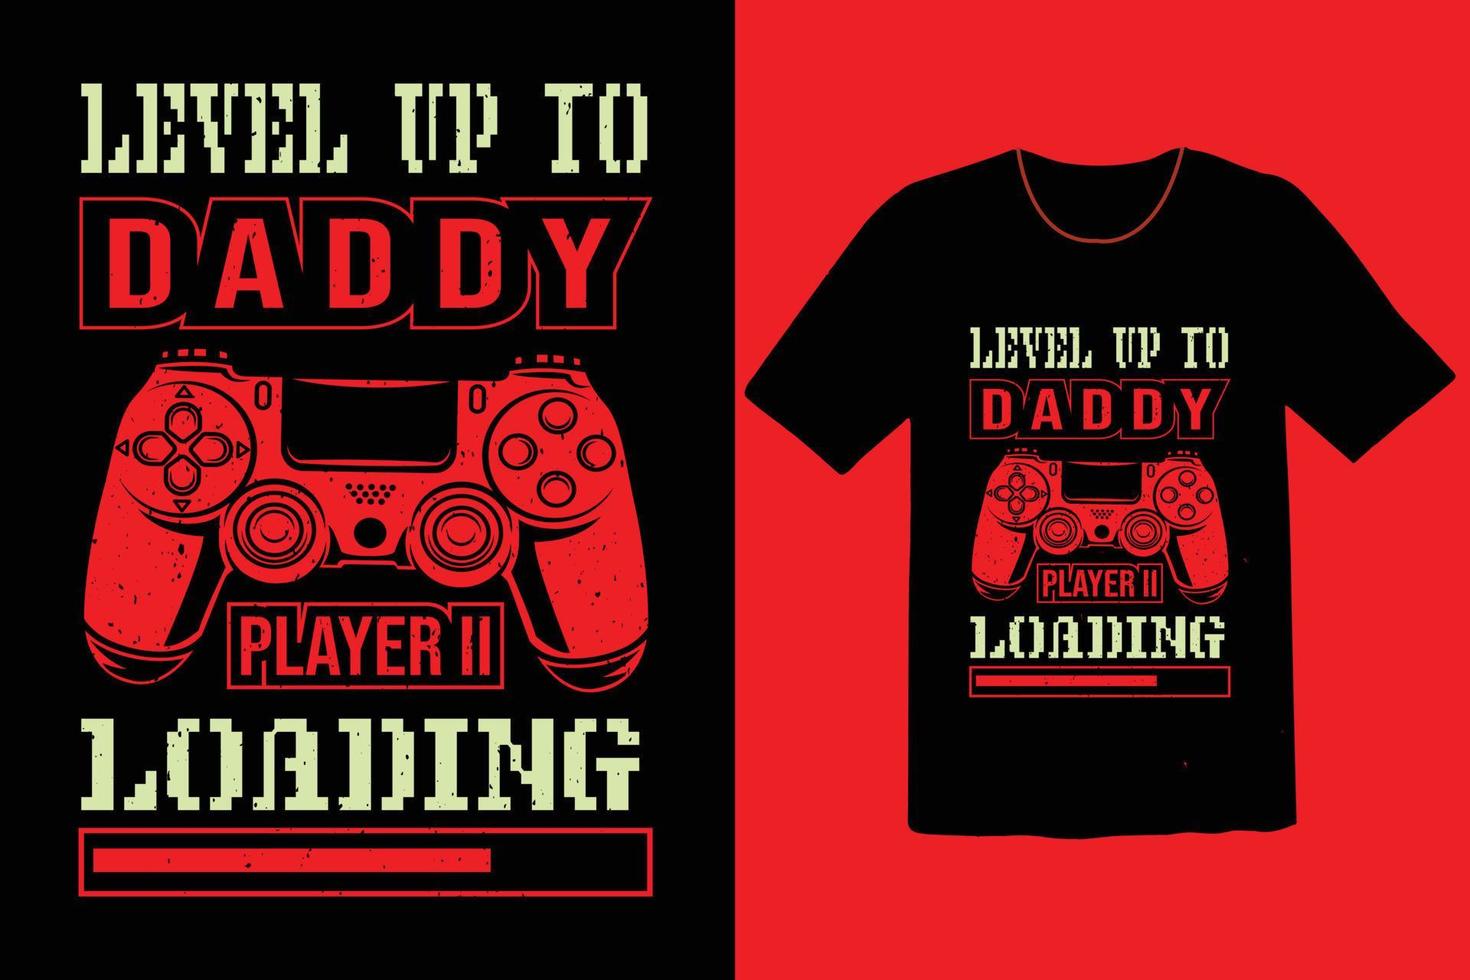 Gaming t shirt design vector